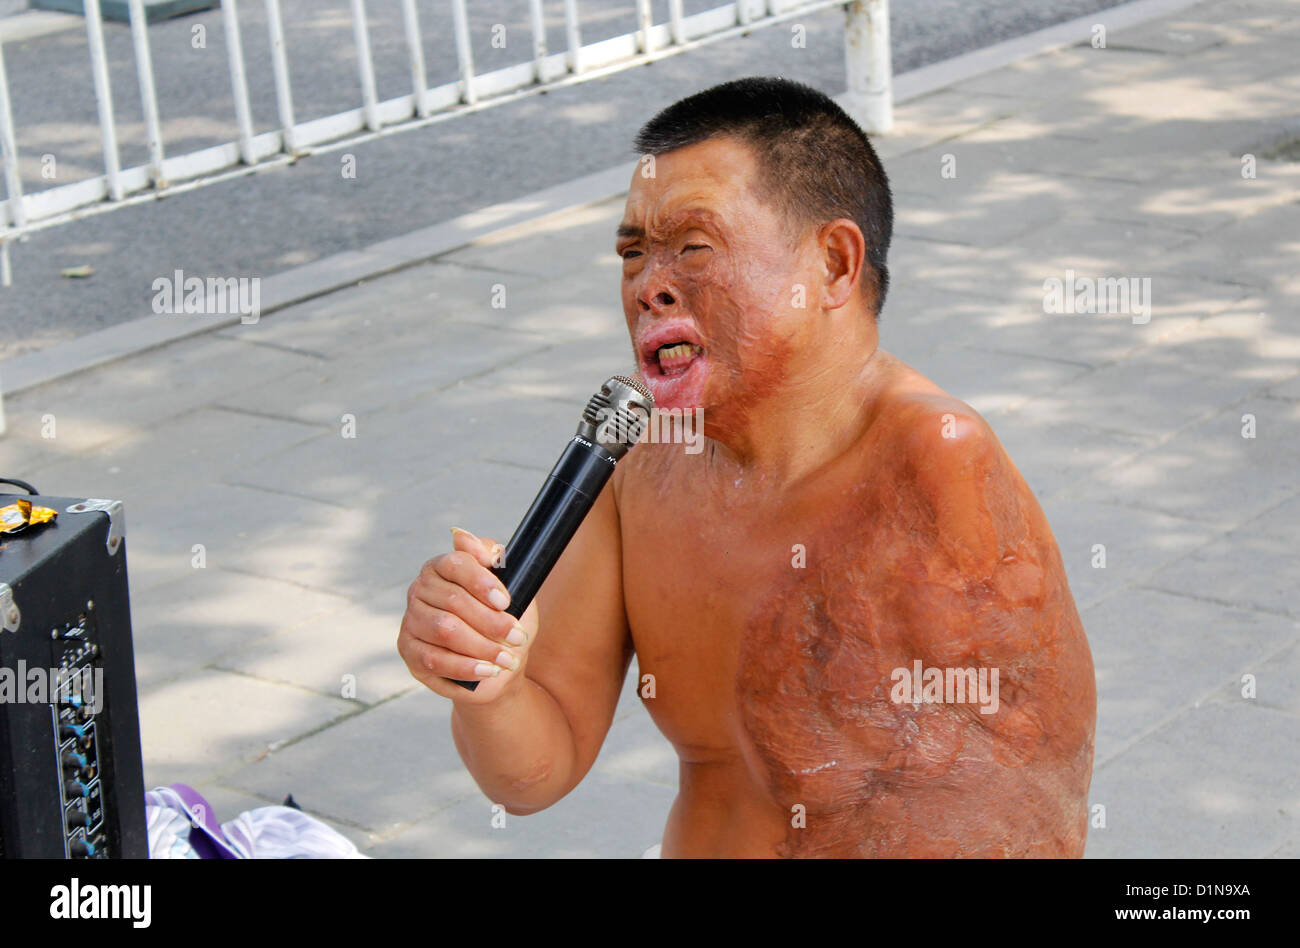 Un hombre sin hogar quemado cicatrizado bagger sin extremidades karayoki cantando en la calle por dinero en Pekín, China Foto de stock